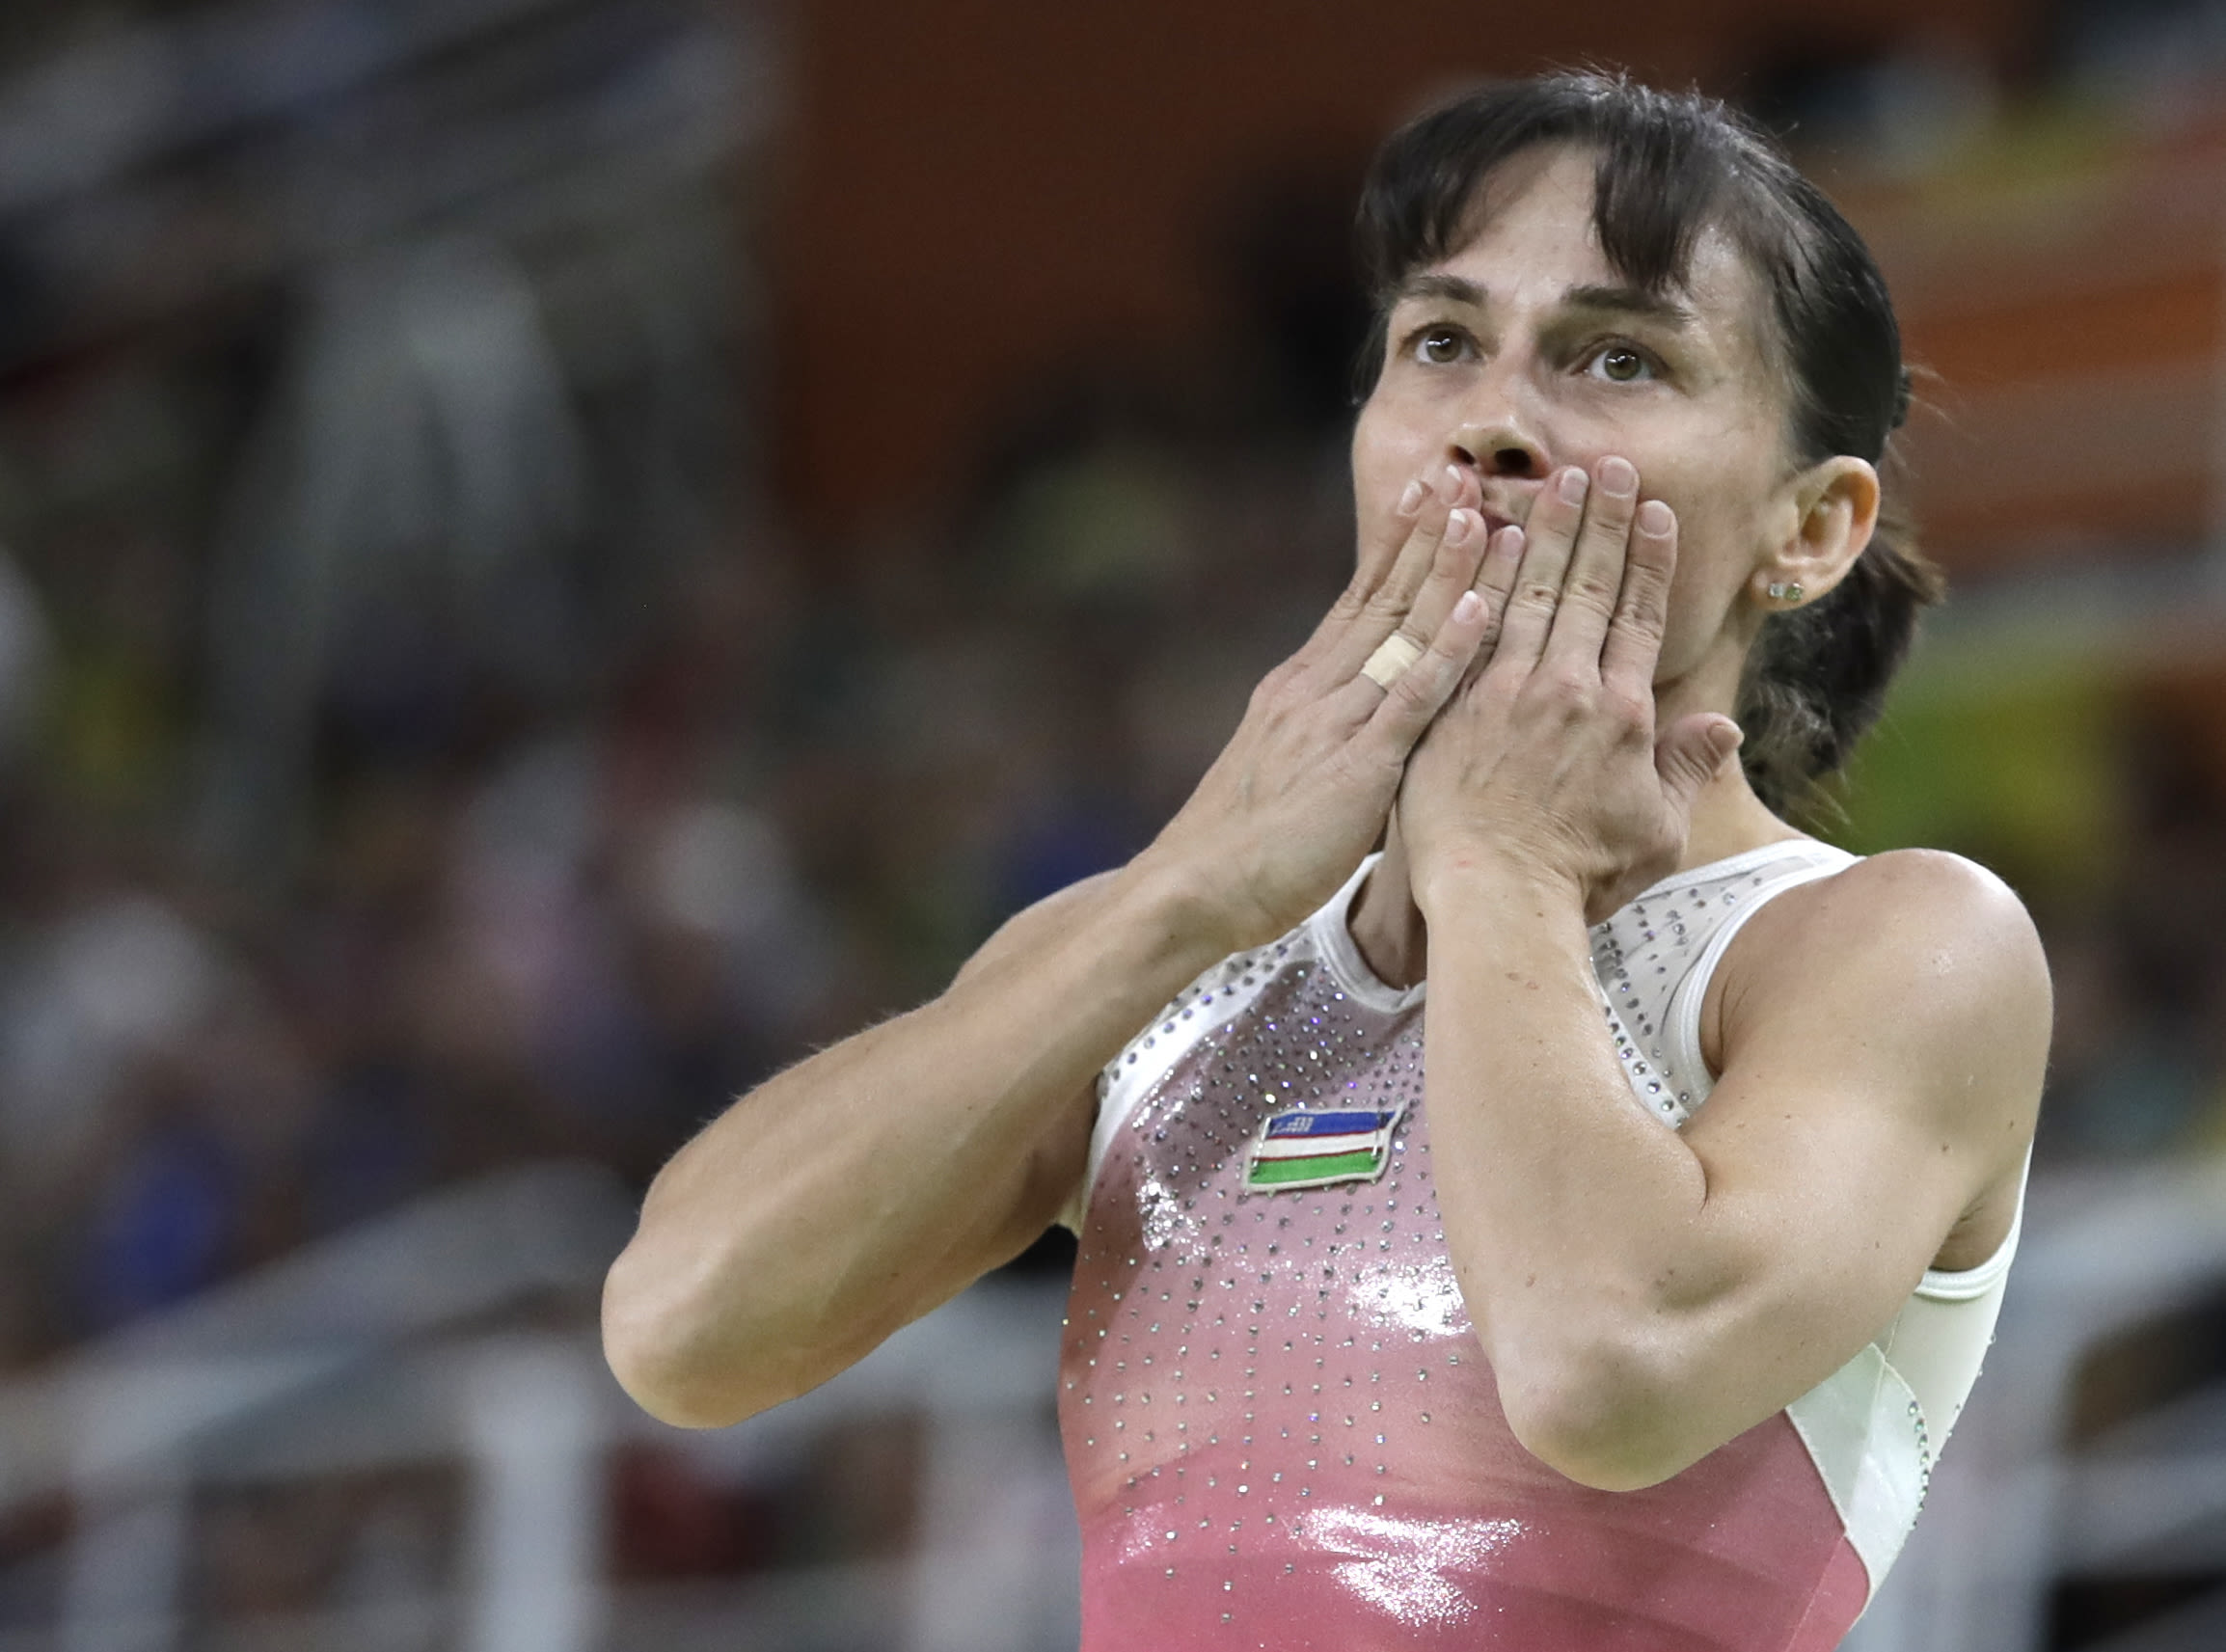 Legendary gymnast suffers injury that ends bid for ninth Olympics